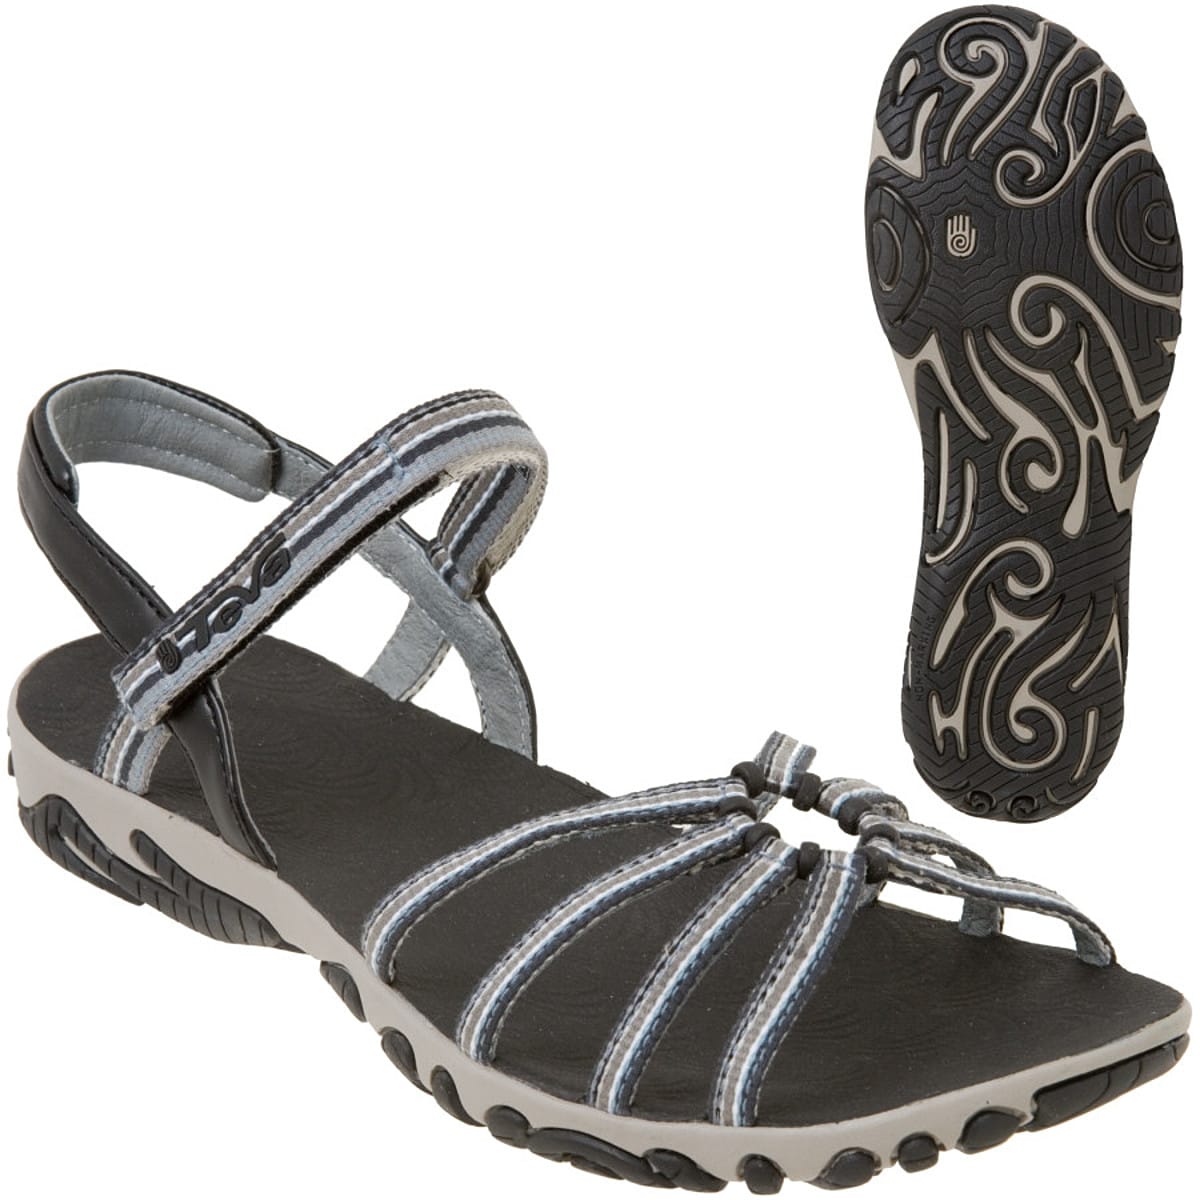 Kayenta Sandal Women's - Footwear